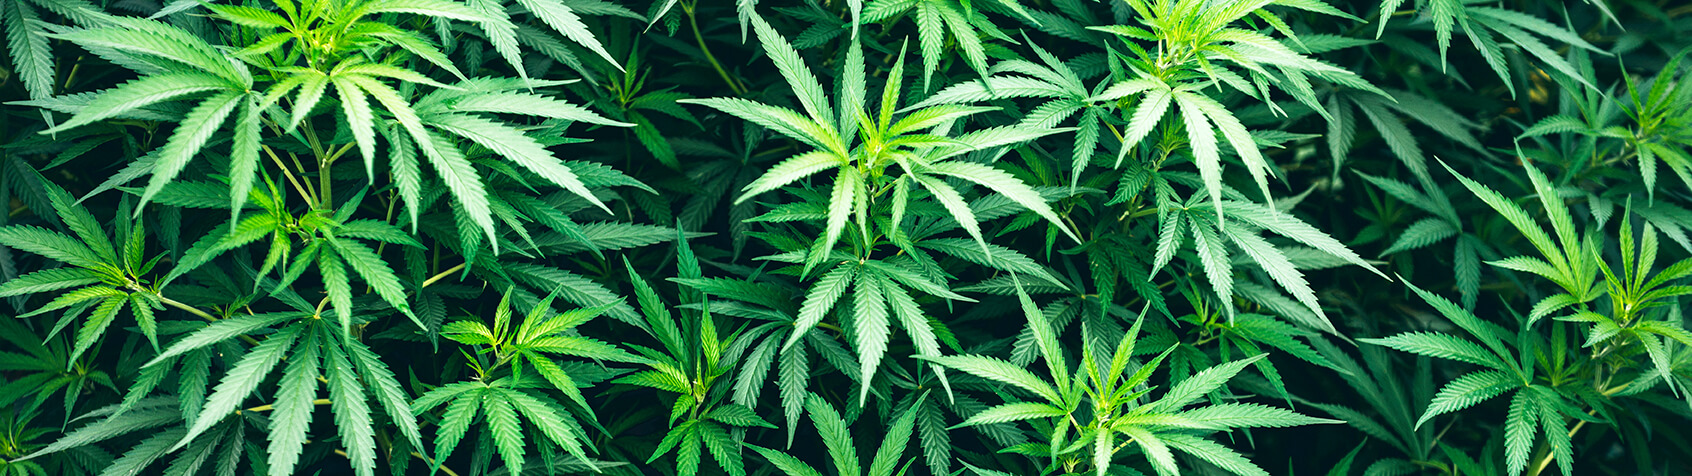 Closeup of cannabis plants